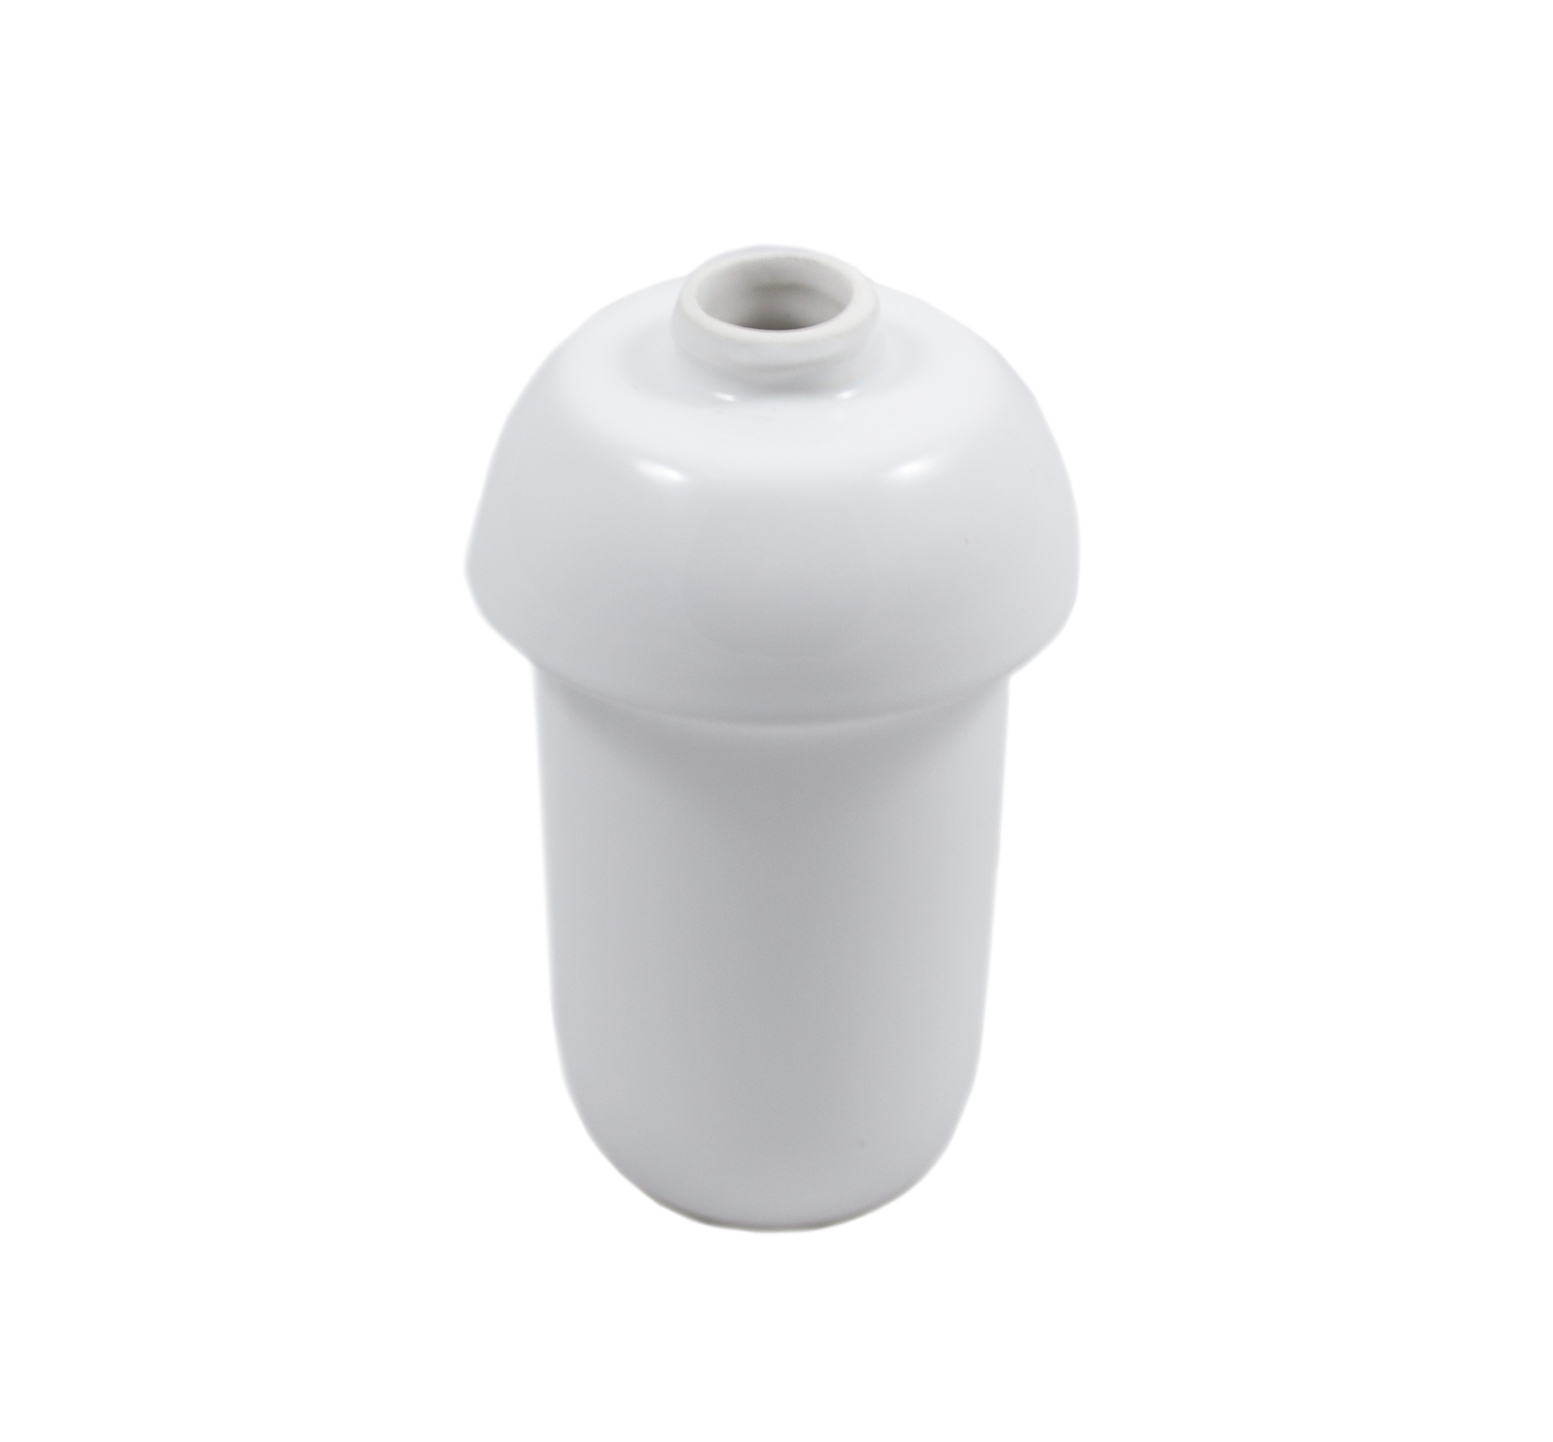 Spare white ceramic dispenser - quality artisan product